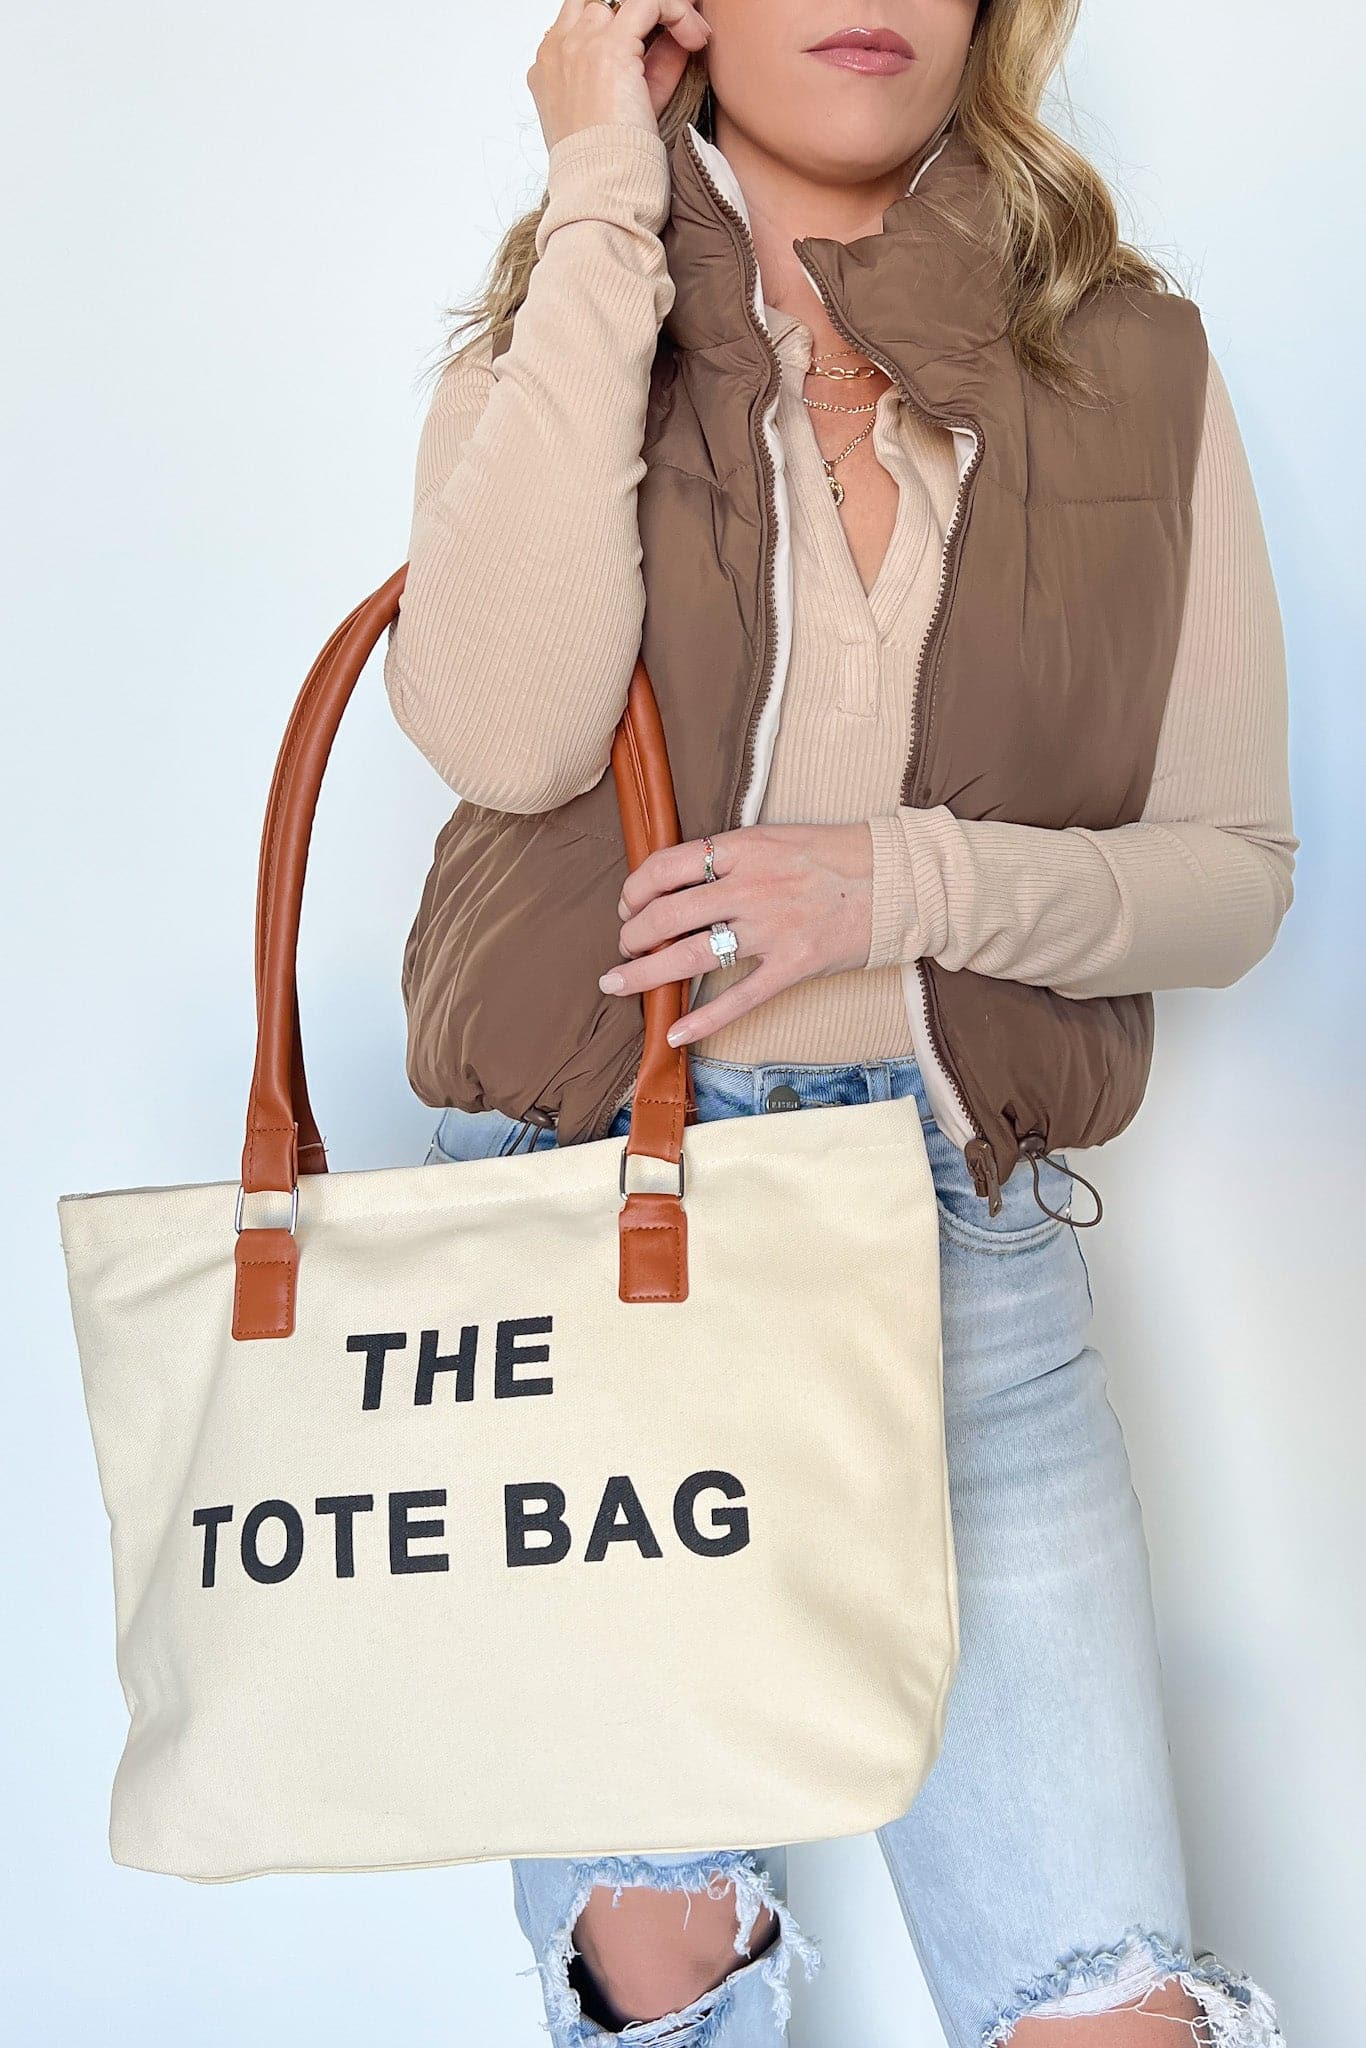  The Tote Bag Graphic Canvas Tote - FINAL SALE - kitchencabinetmagic